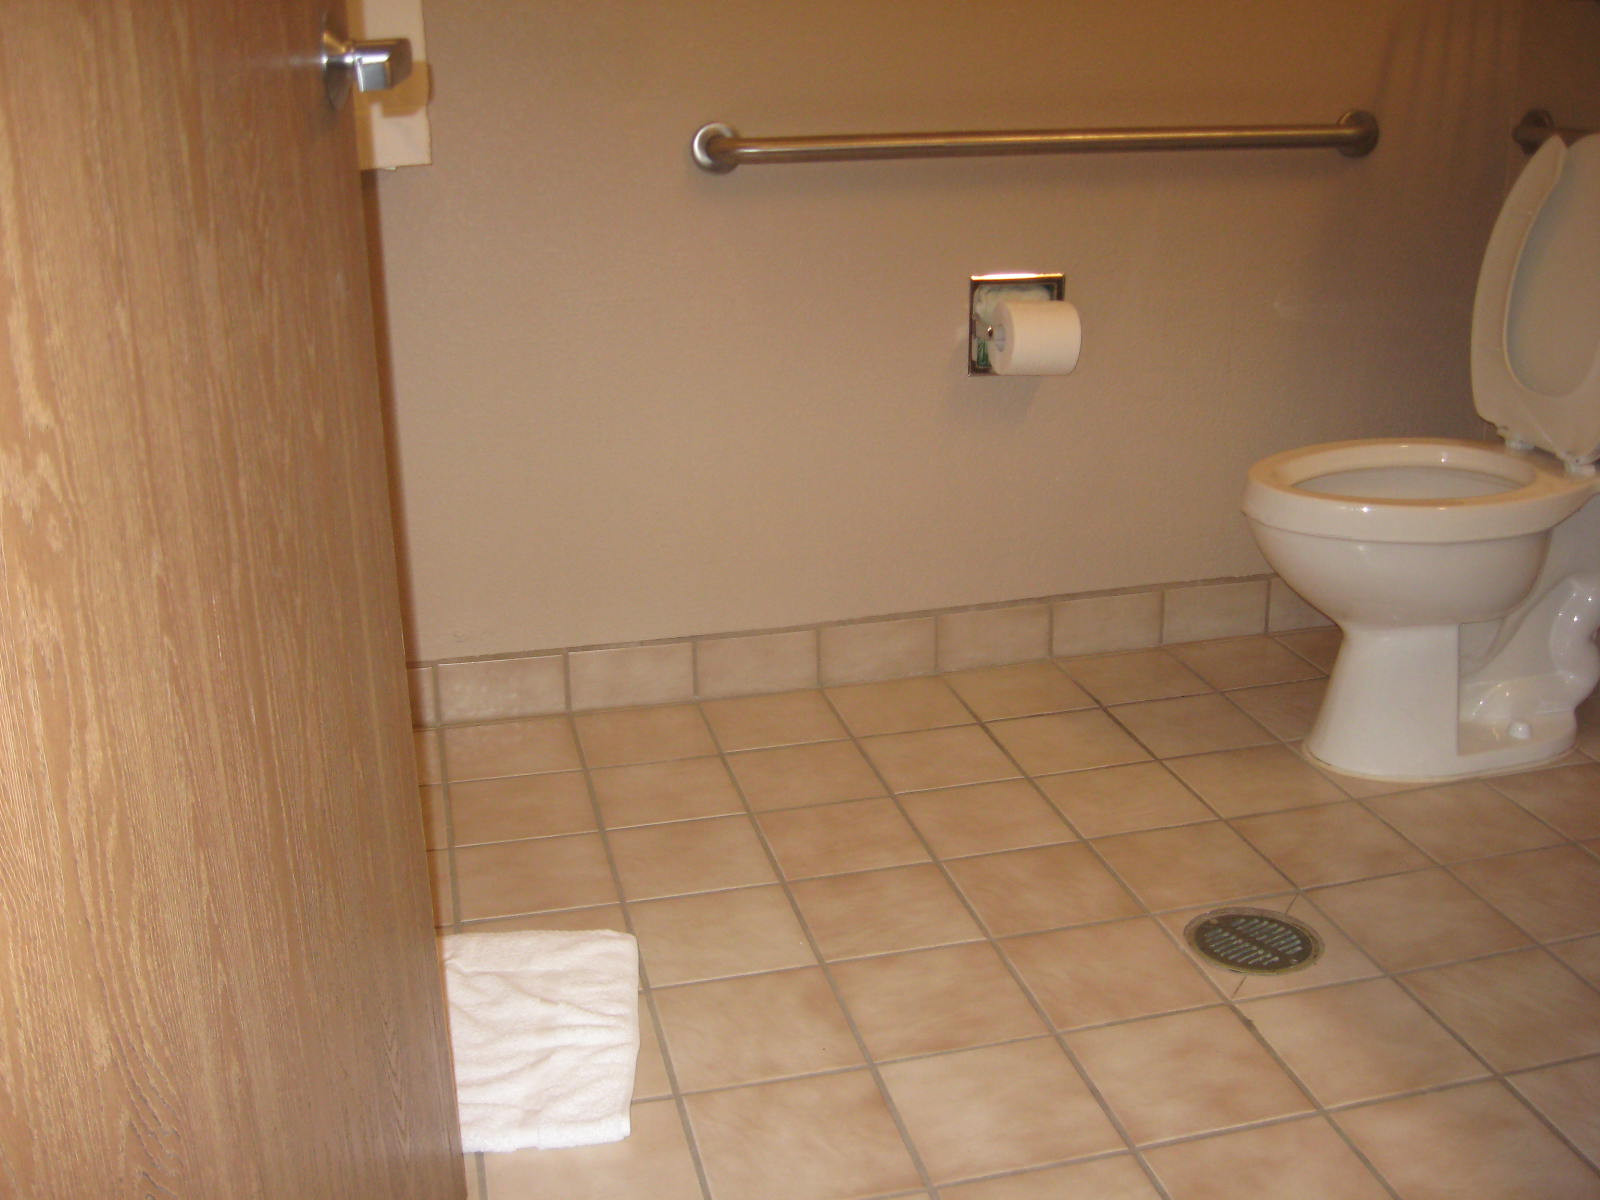 Tile Baseboard In Bathroom
 Hotel Accessible Rooms